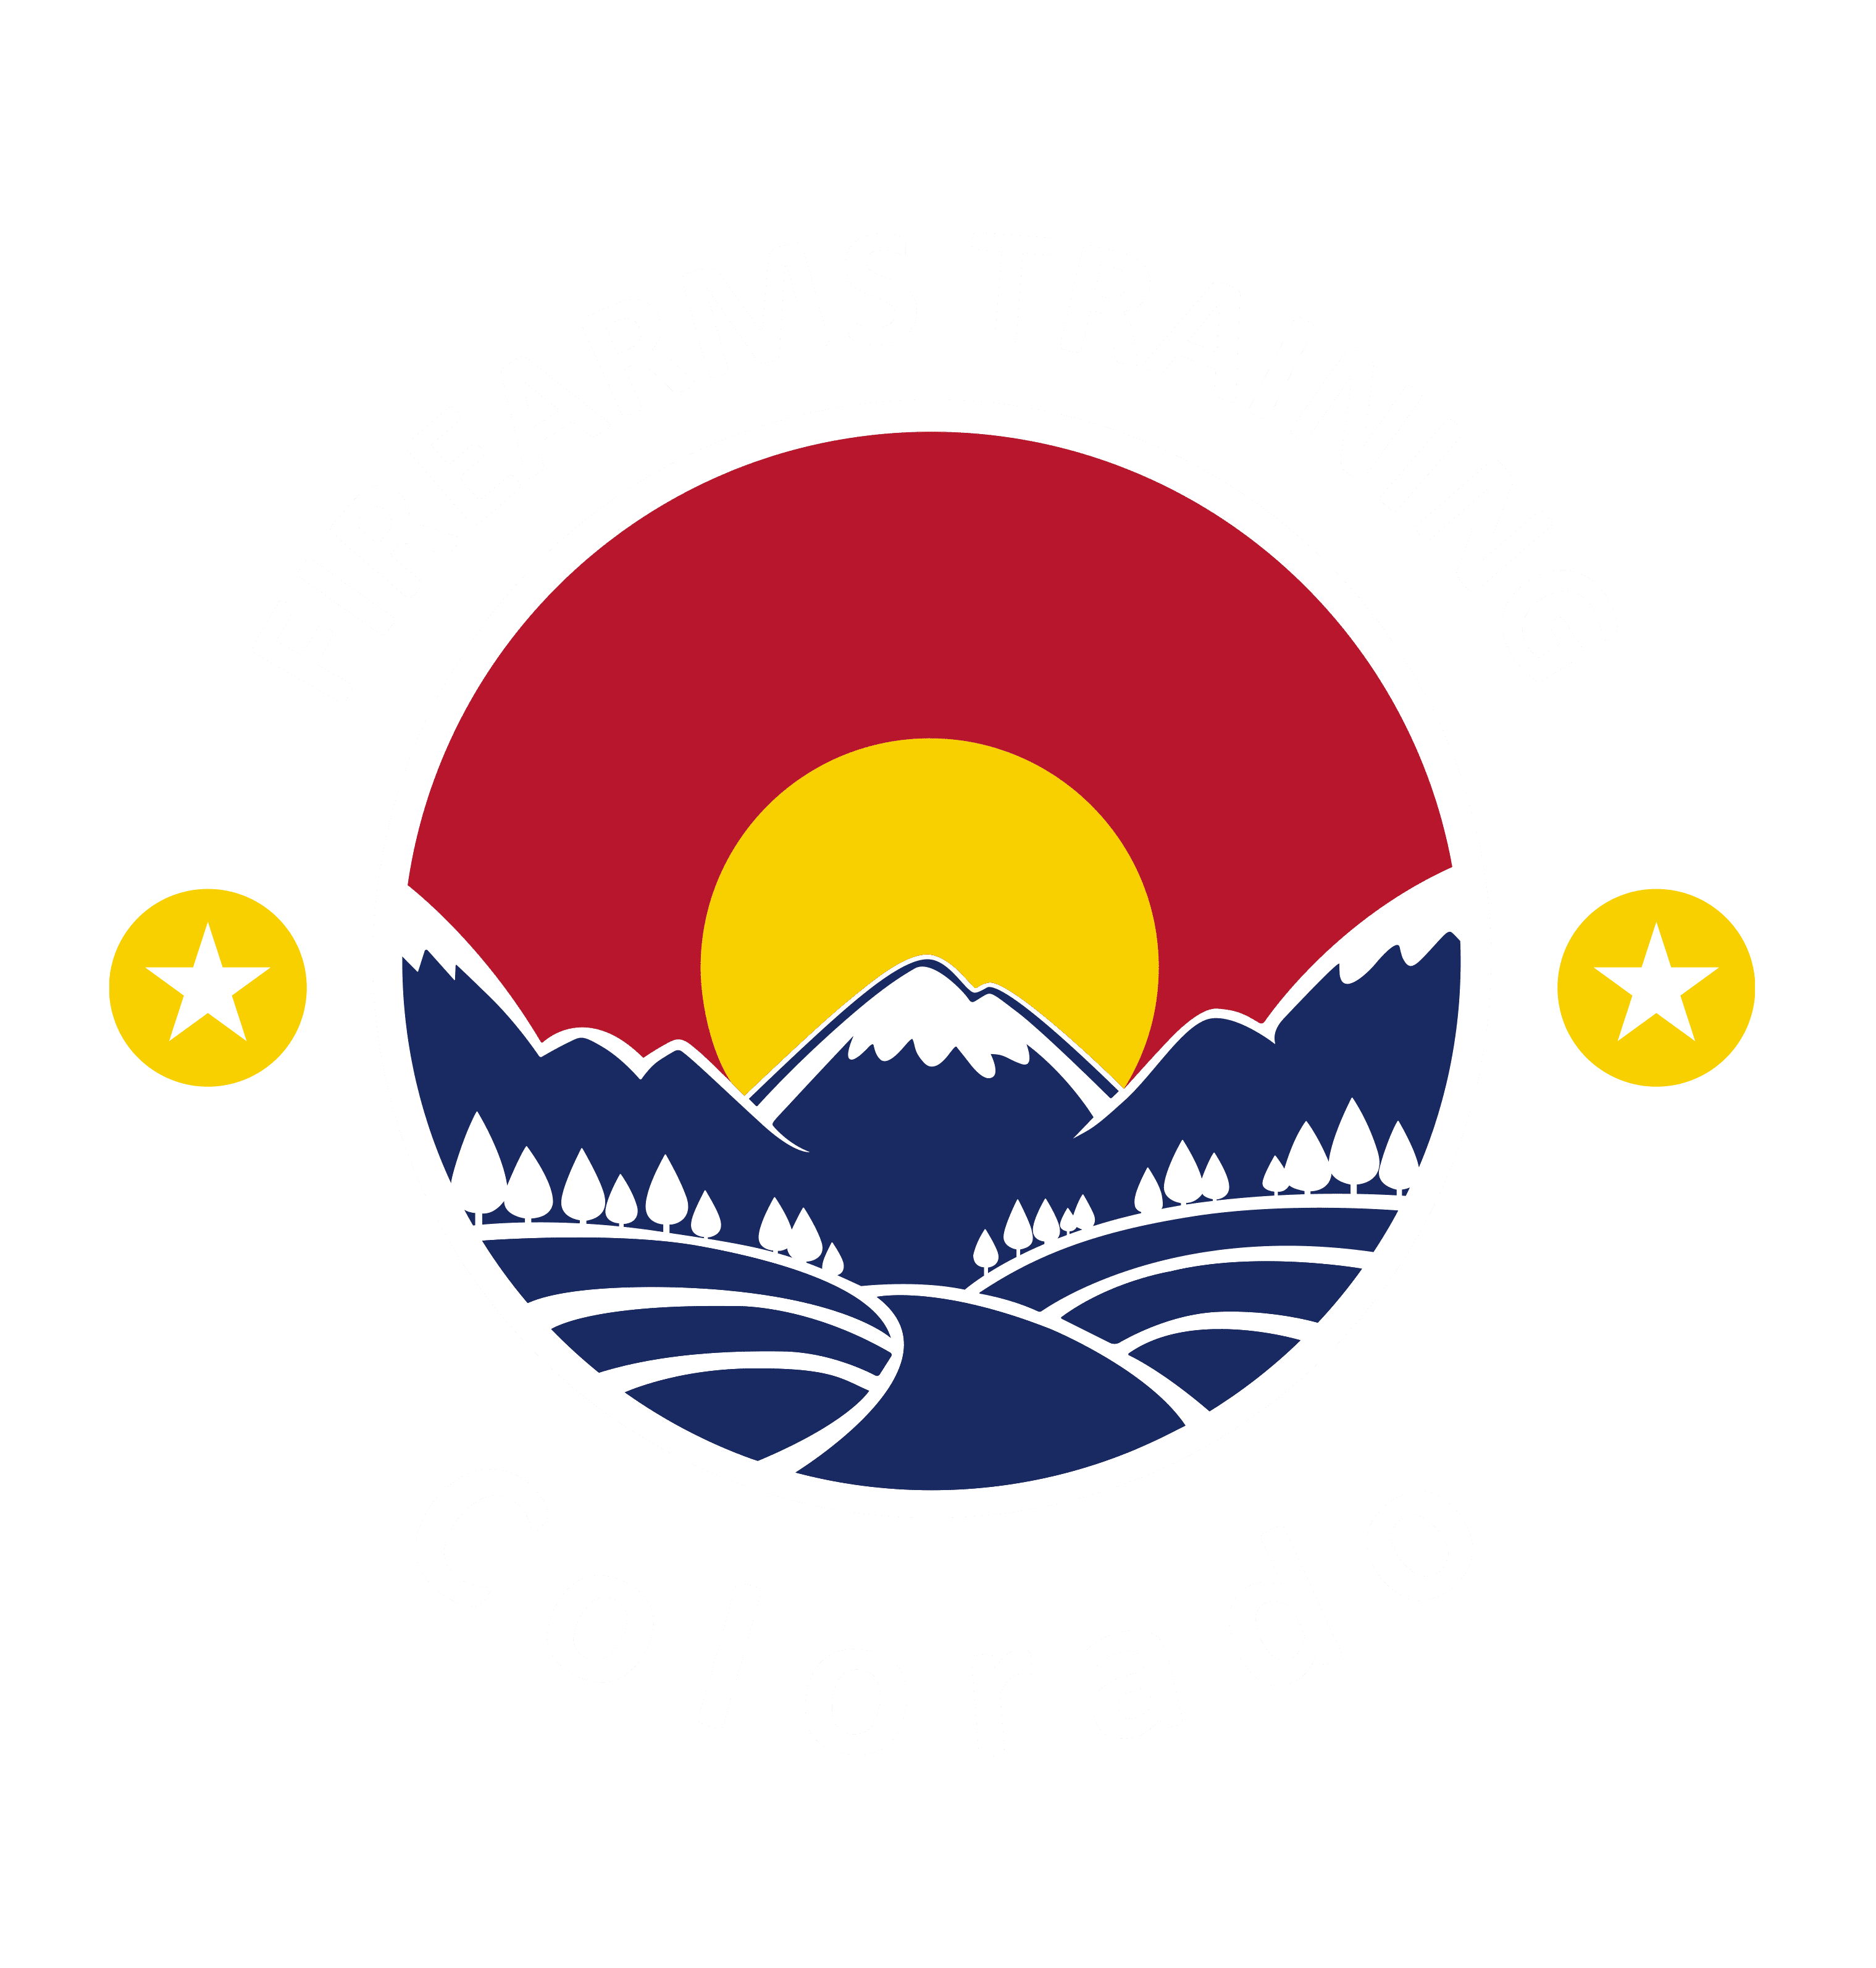 Firearms Training Colorado